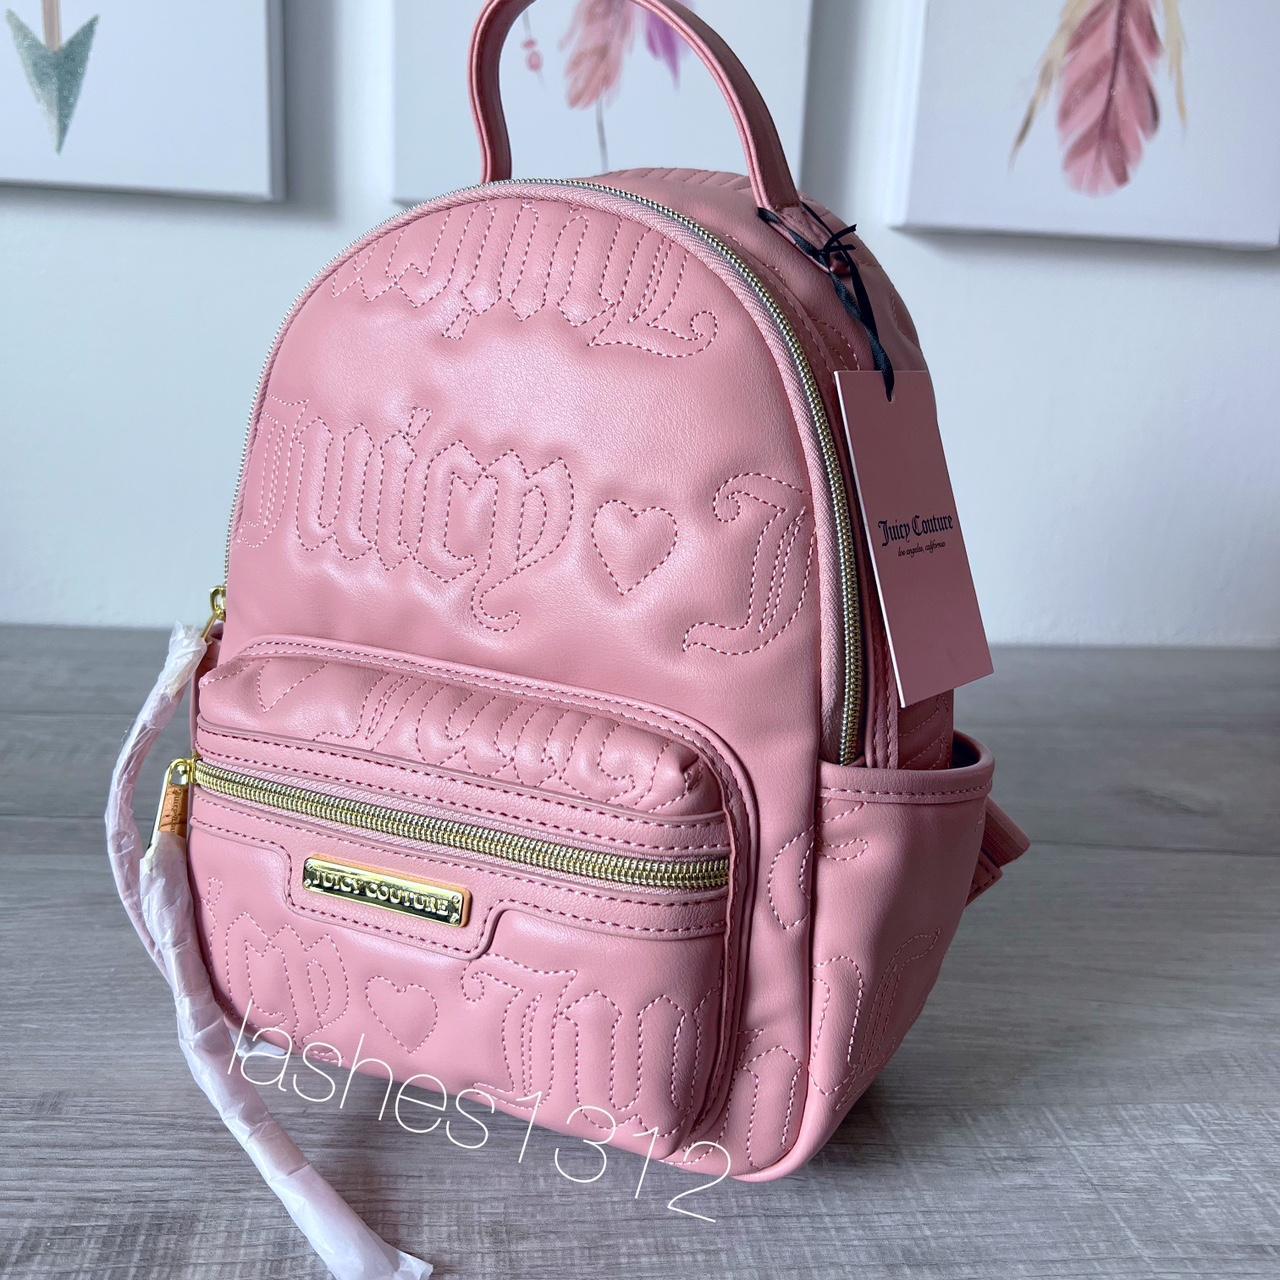 Adidas Originals Trefoil 2.0 Pink Backpack | CoolSprings Galleria